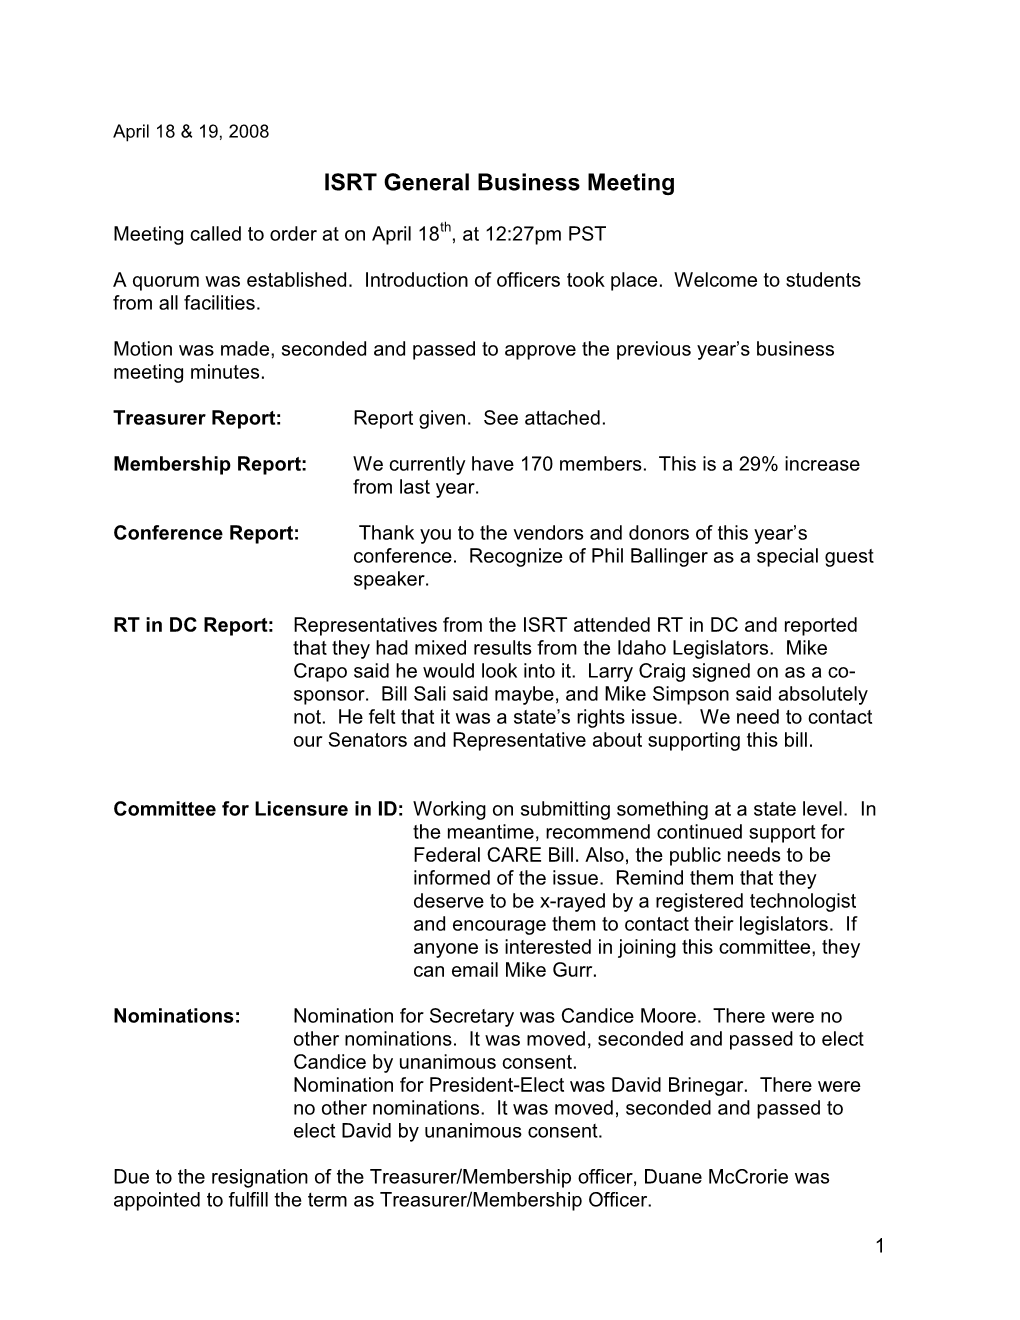 ISRT General Business Meeting